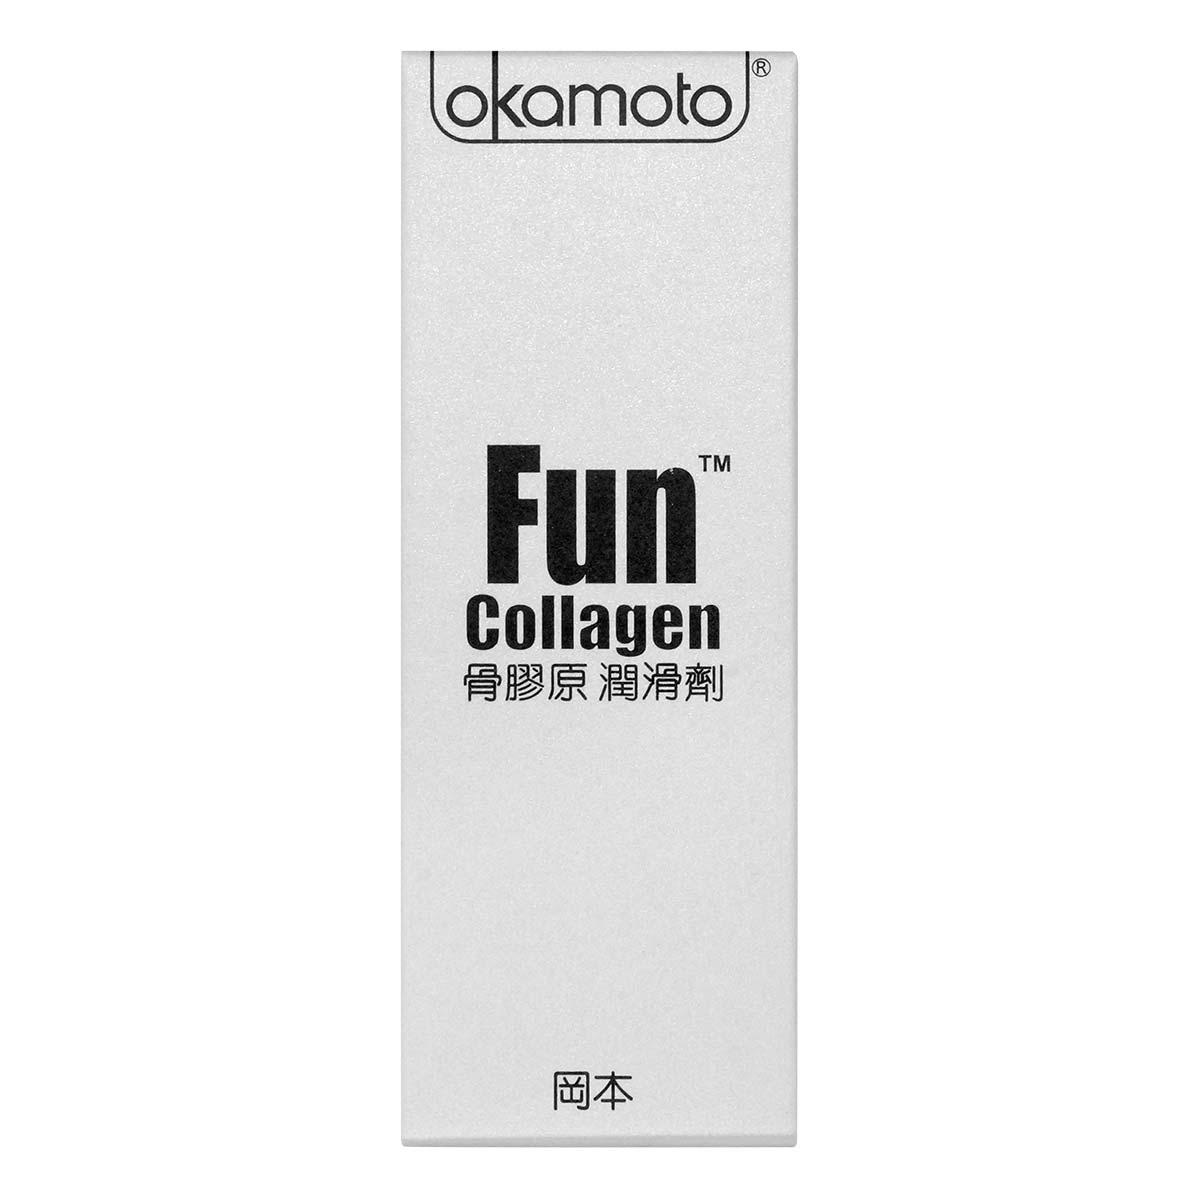 Okamoto FUN Collagen 60ml Water-based Lubricant-p_2